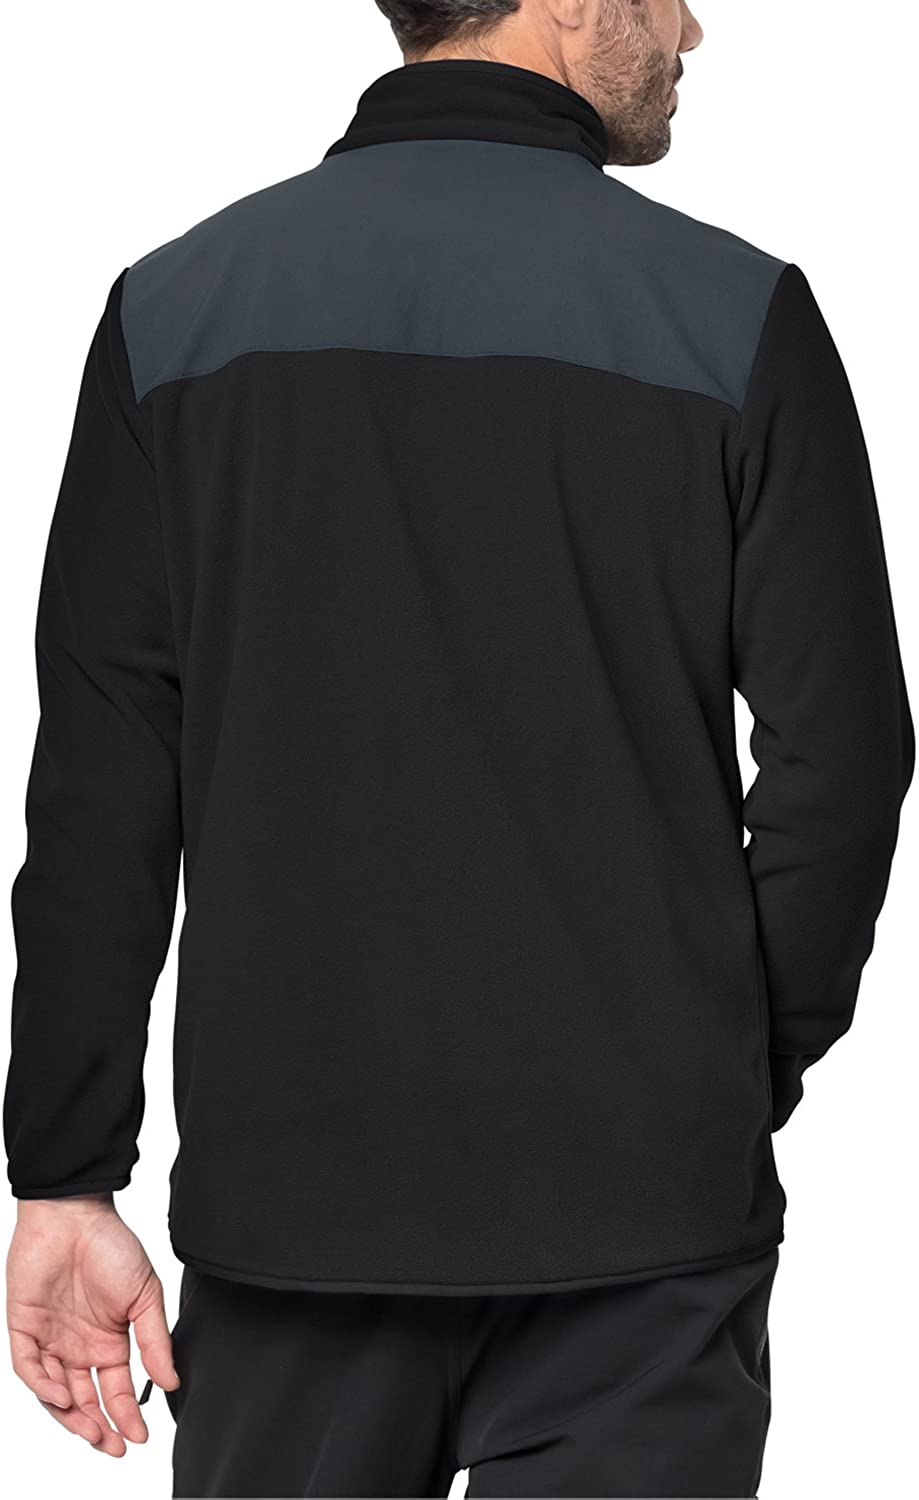 Áo nỉ Jack Wolfskin Performance Flex Jacket black (men) (1706321-1121) size L2